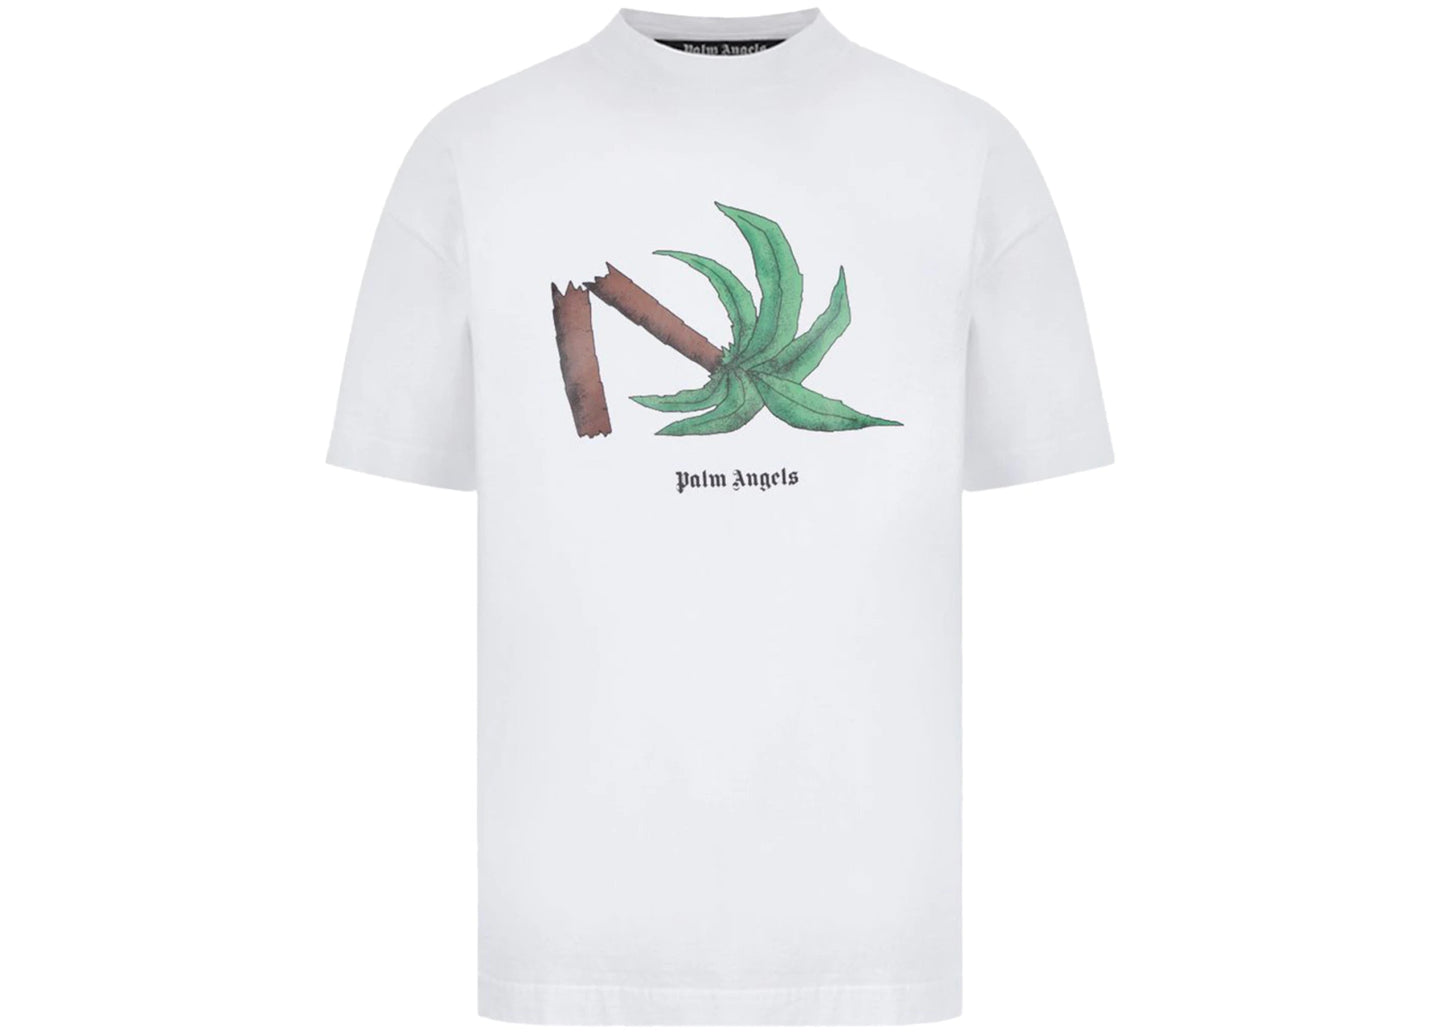 Palm Angels Broken Palm T-Shirt White / Brown / Green - Supra Sneakers